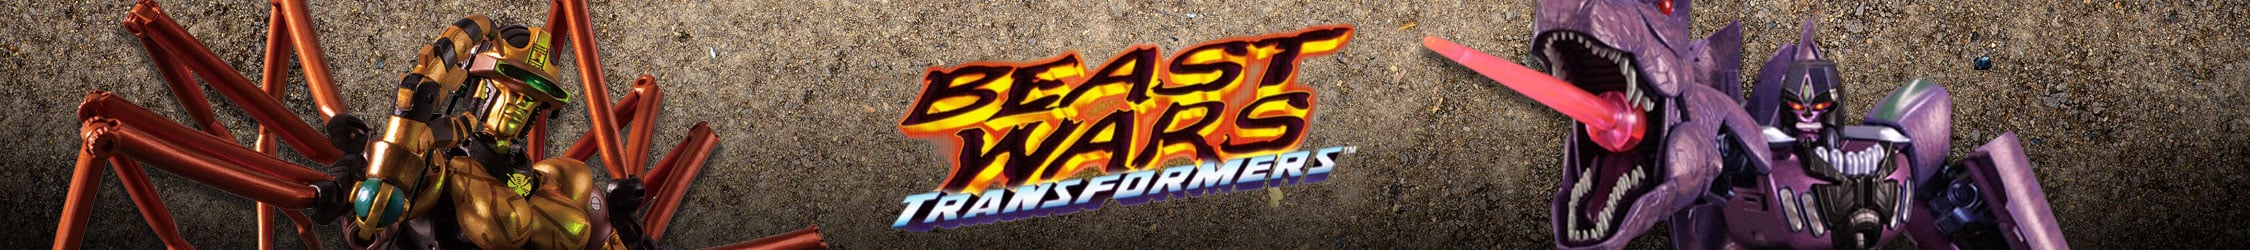 Beastwars Transformers